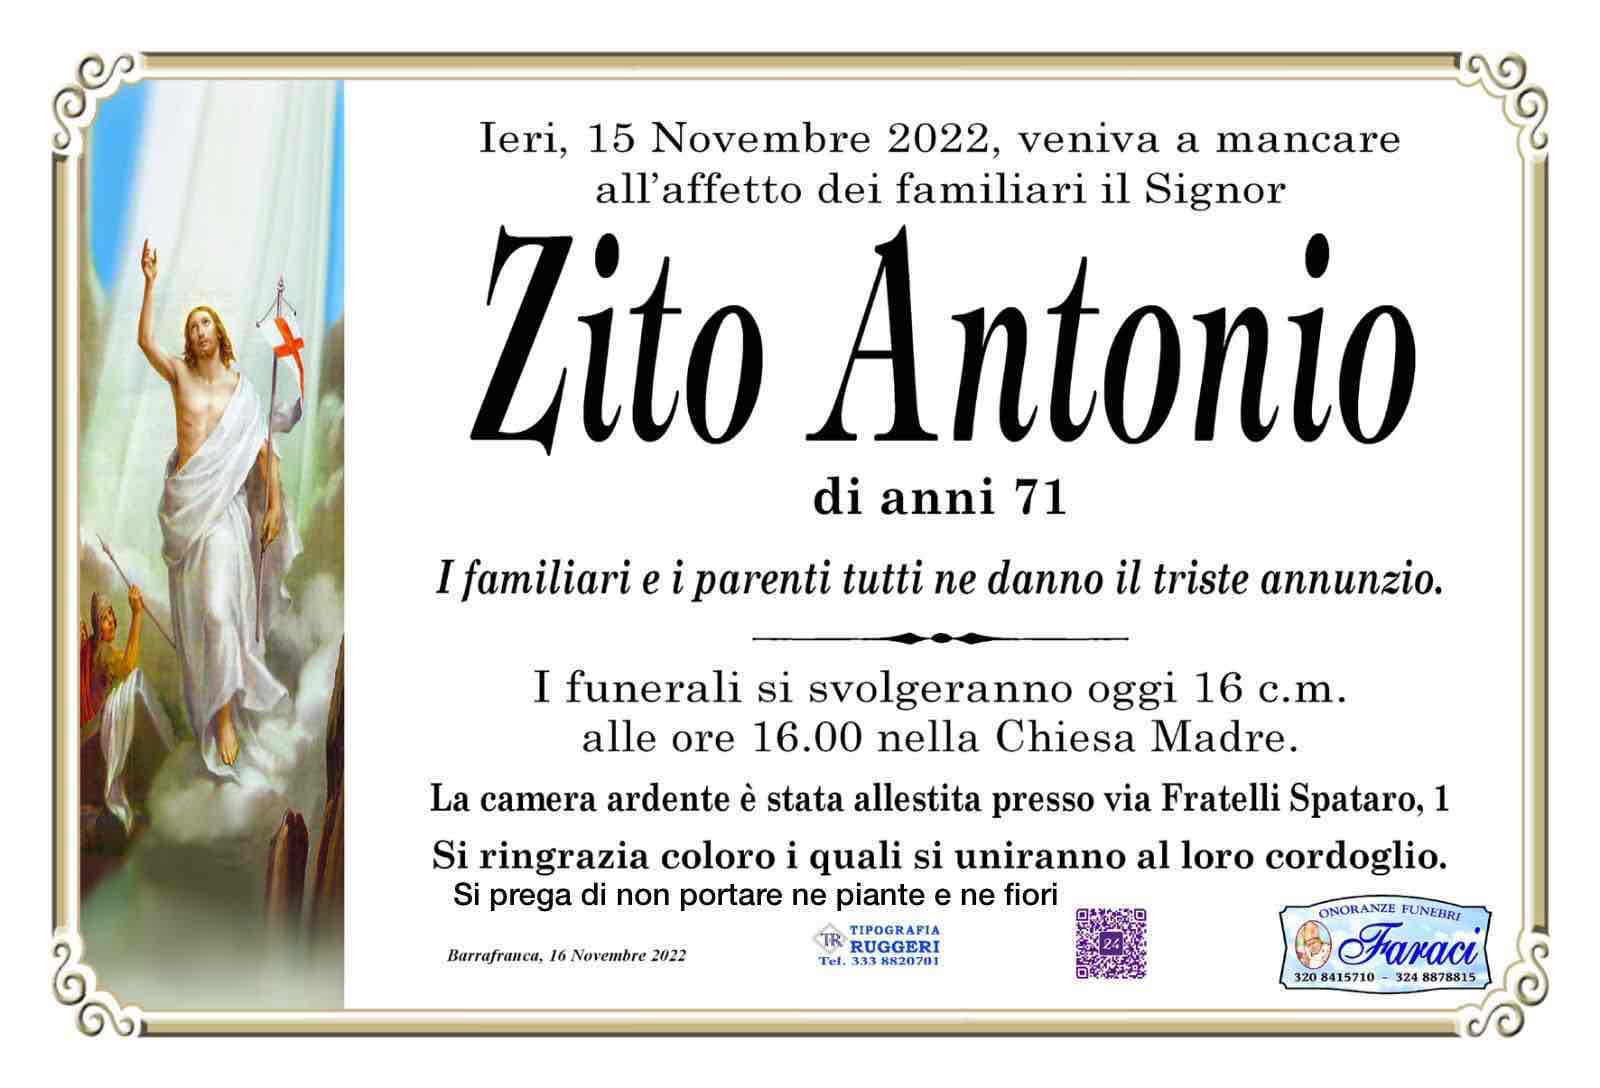 Antonio Zito